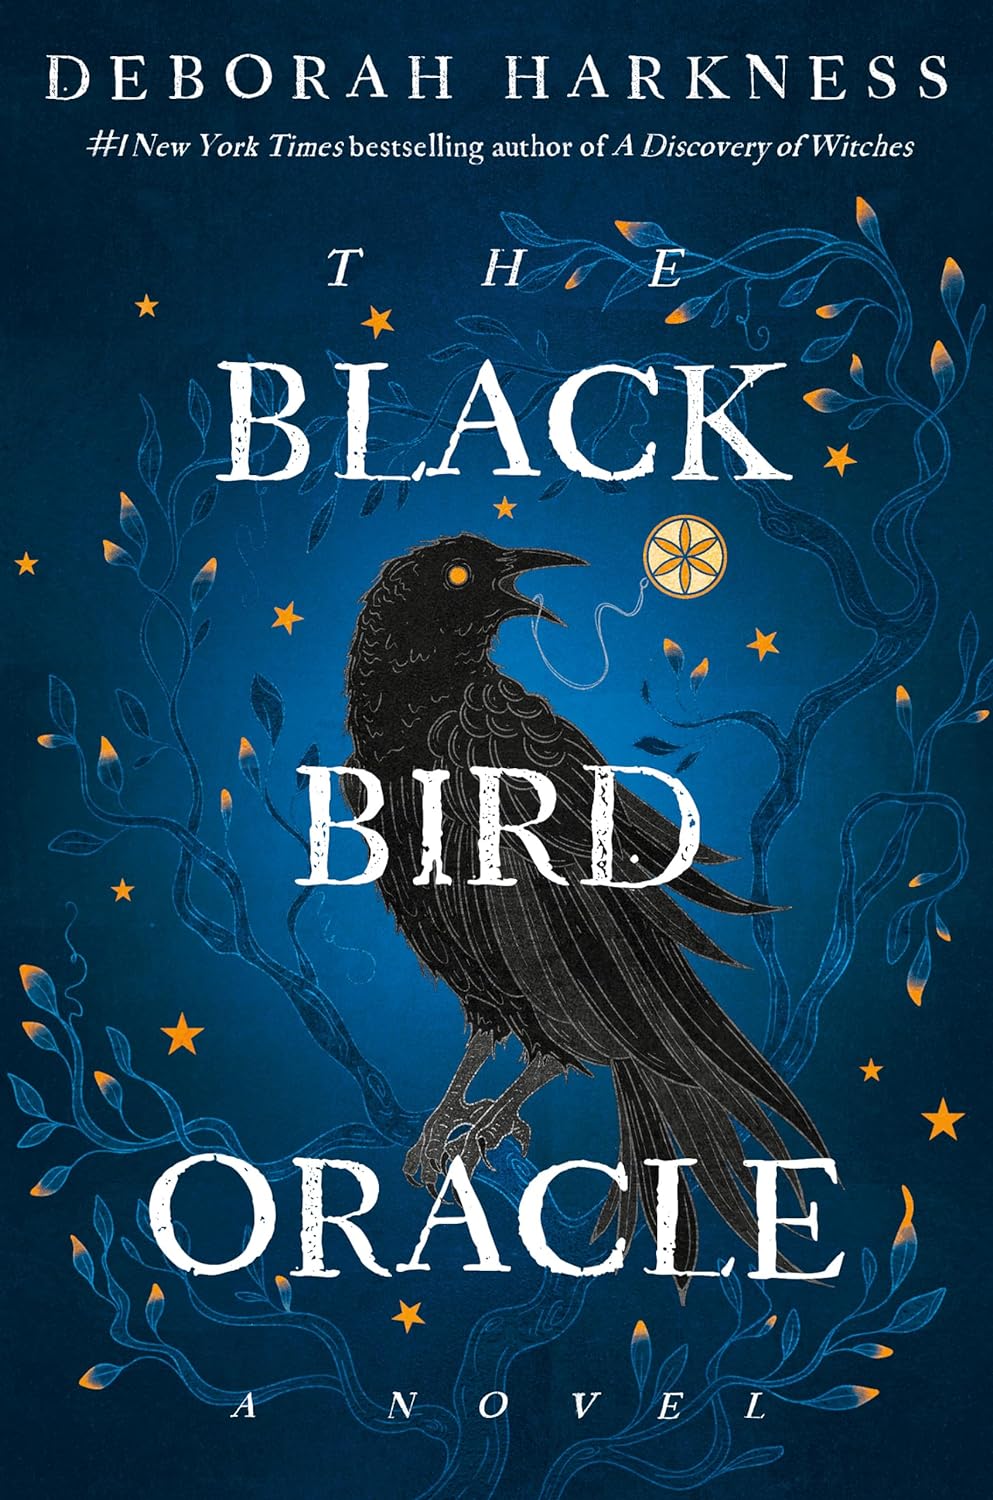 The Black Bird Oracle by Deborah Harkness